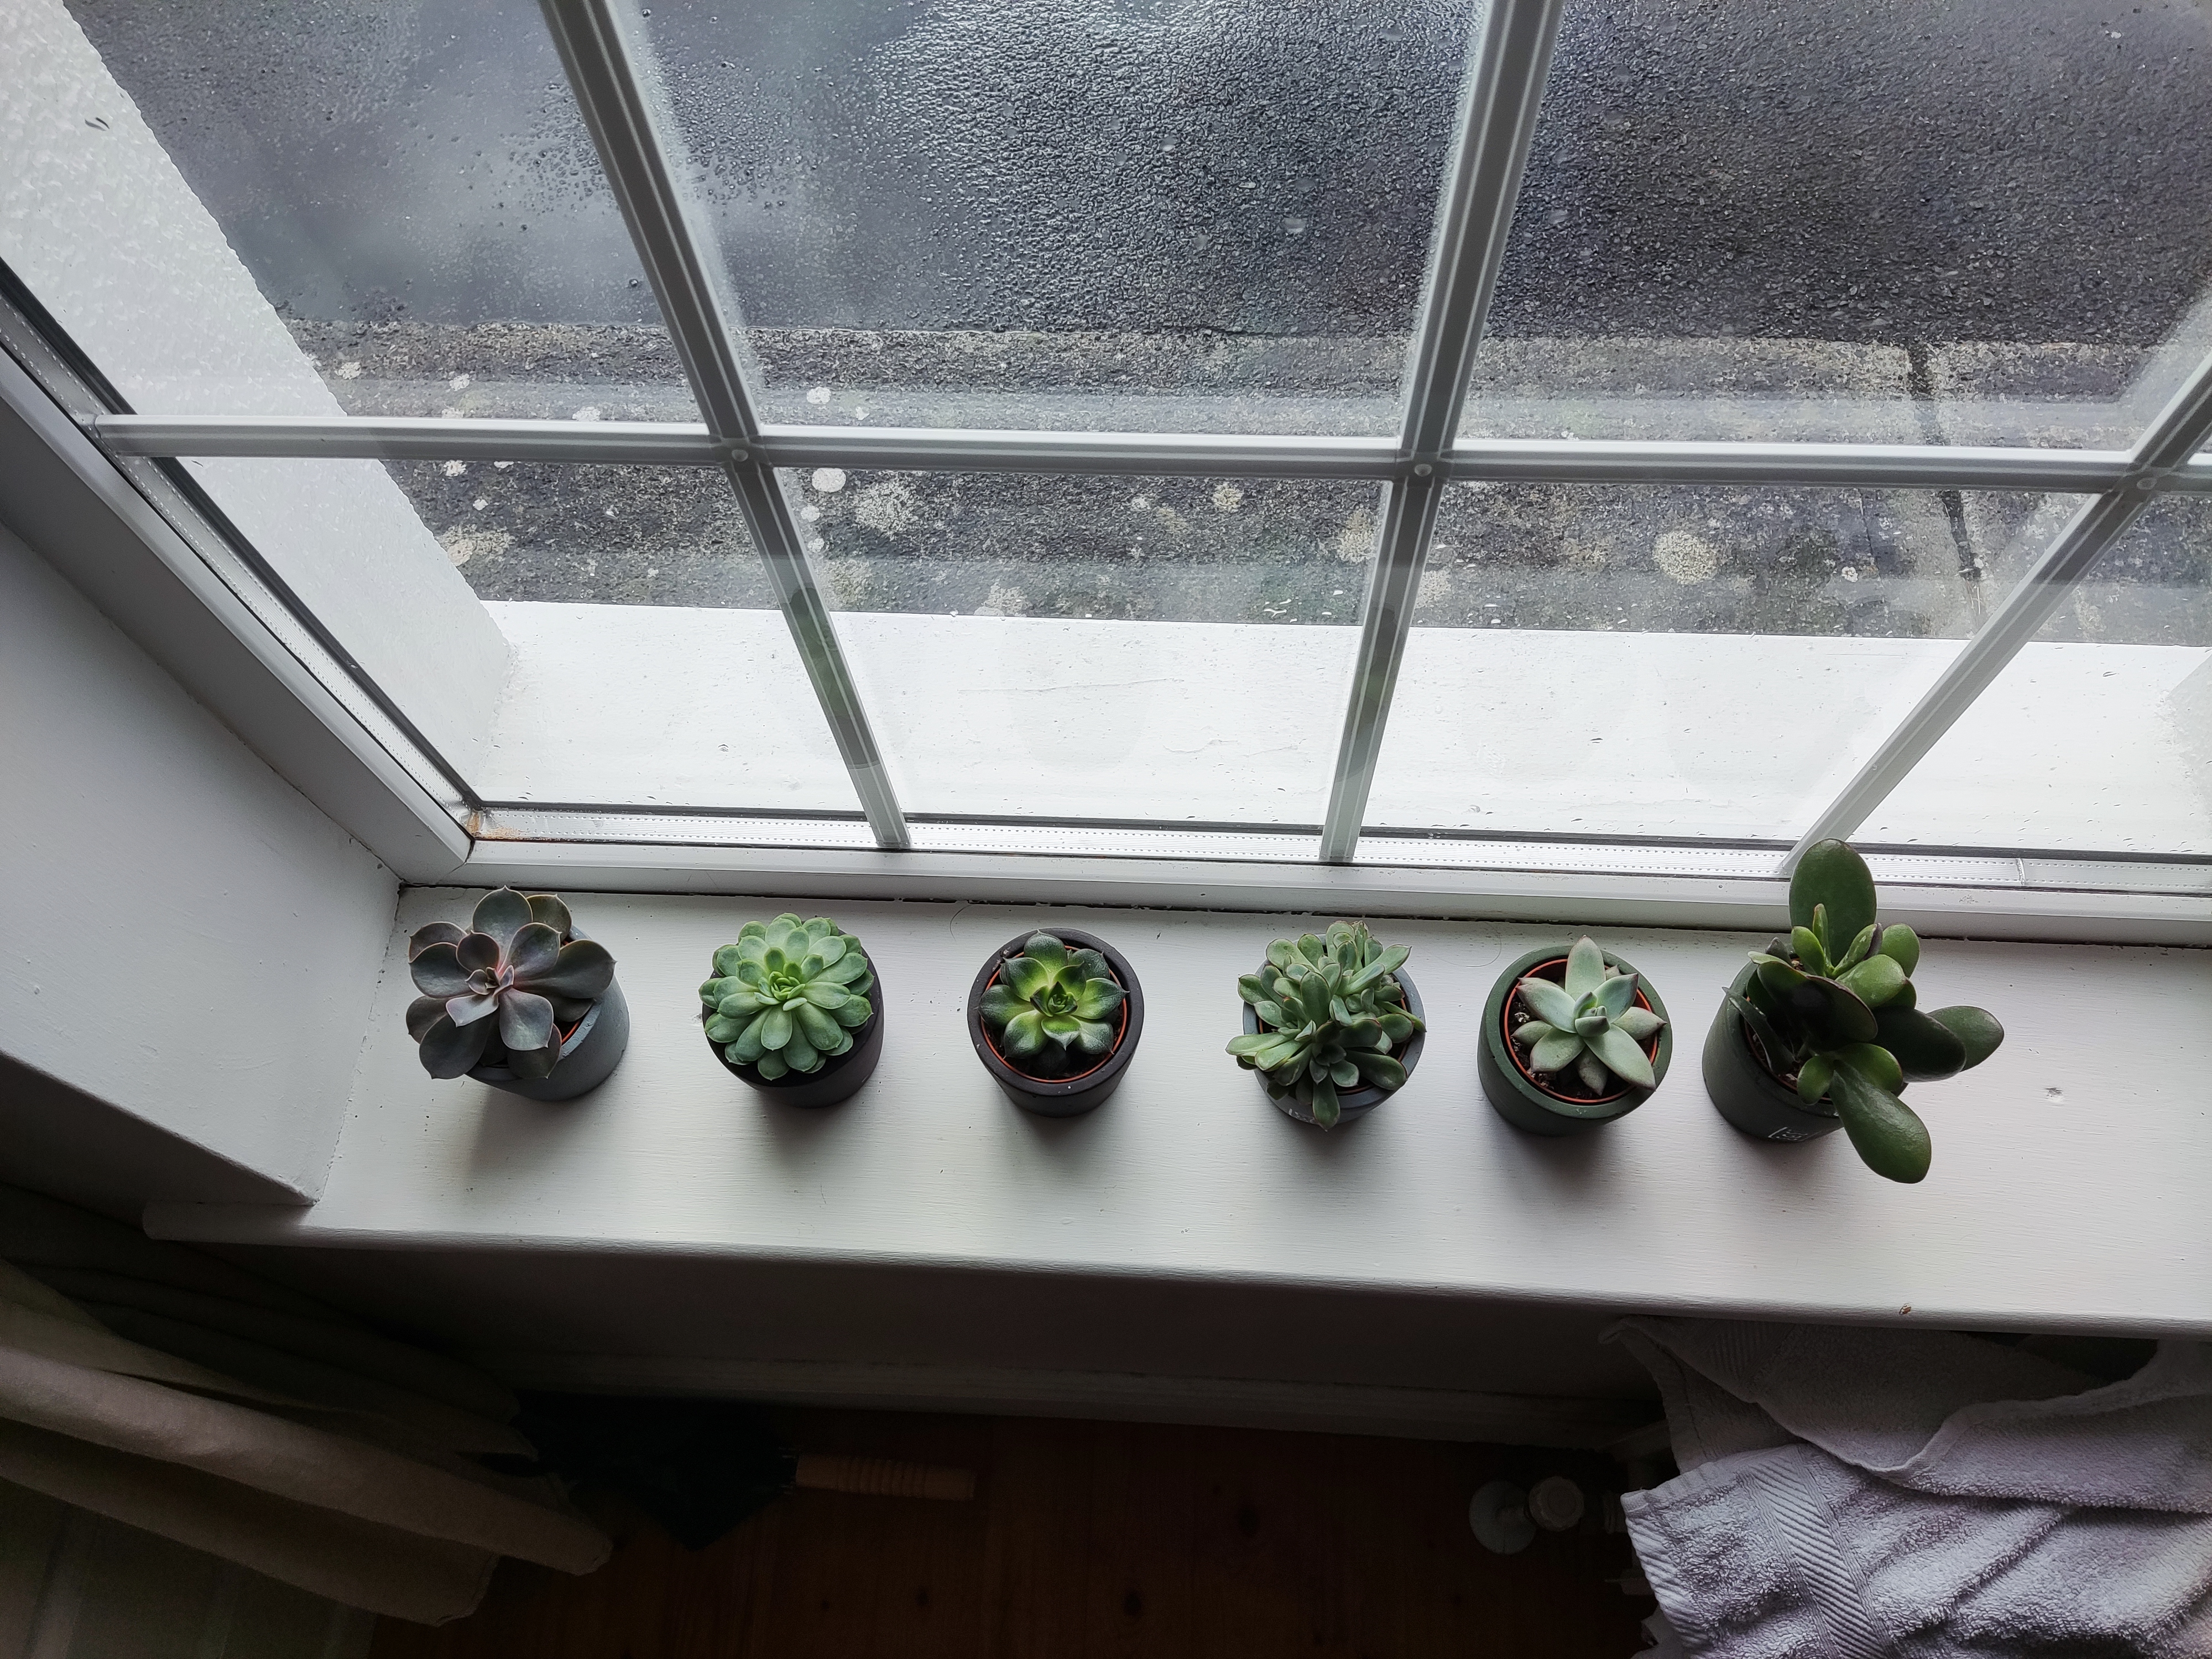 A window full of succulent plants in ceramic pots